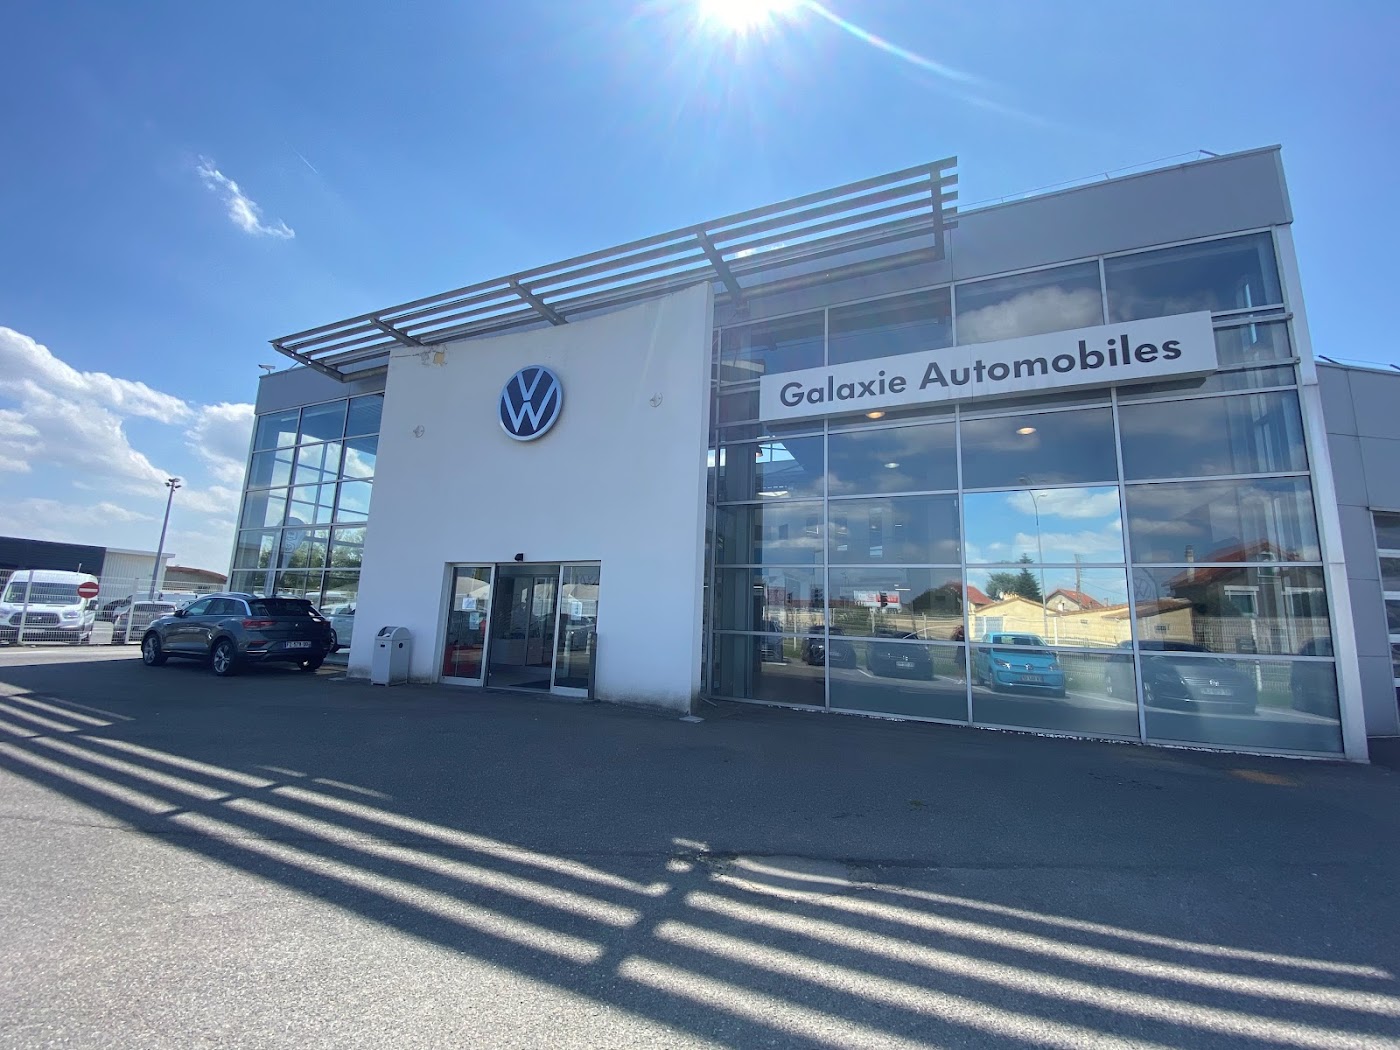 Volkswagen Arpajon Groupe Donjon Automobiles